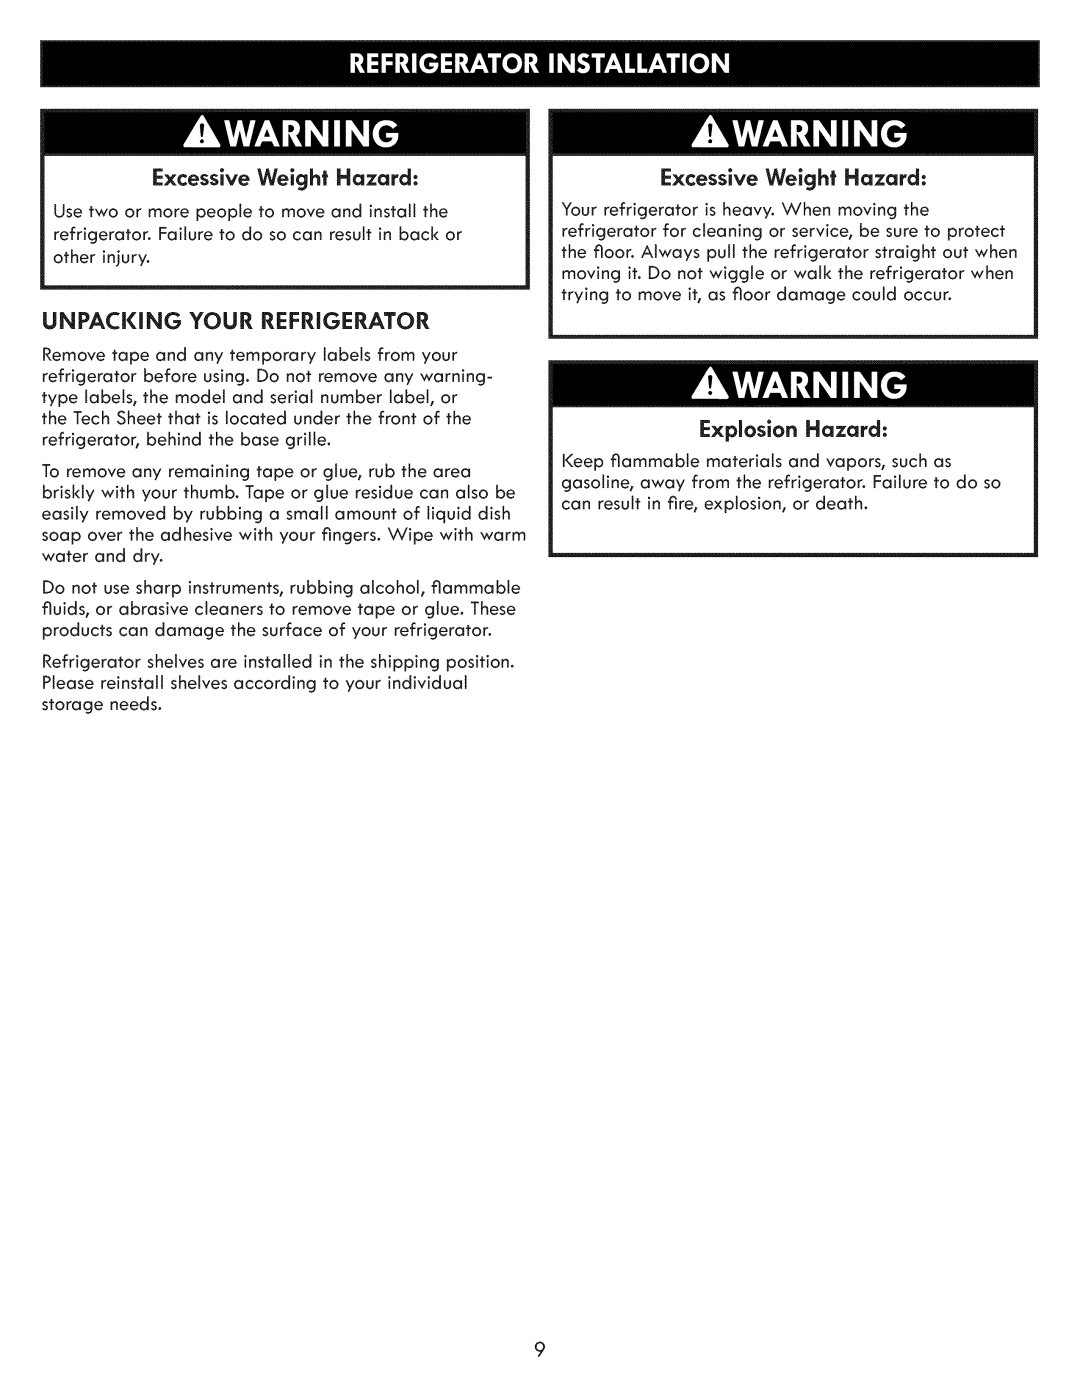 Kenmore 795.7103 manual Excessive Weight Hazard, Unpacking Your Refrigerator, Explosion Hazard 